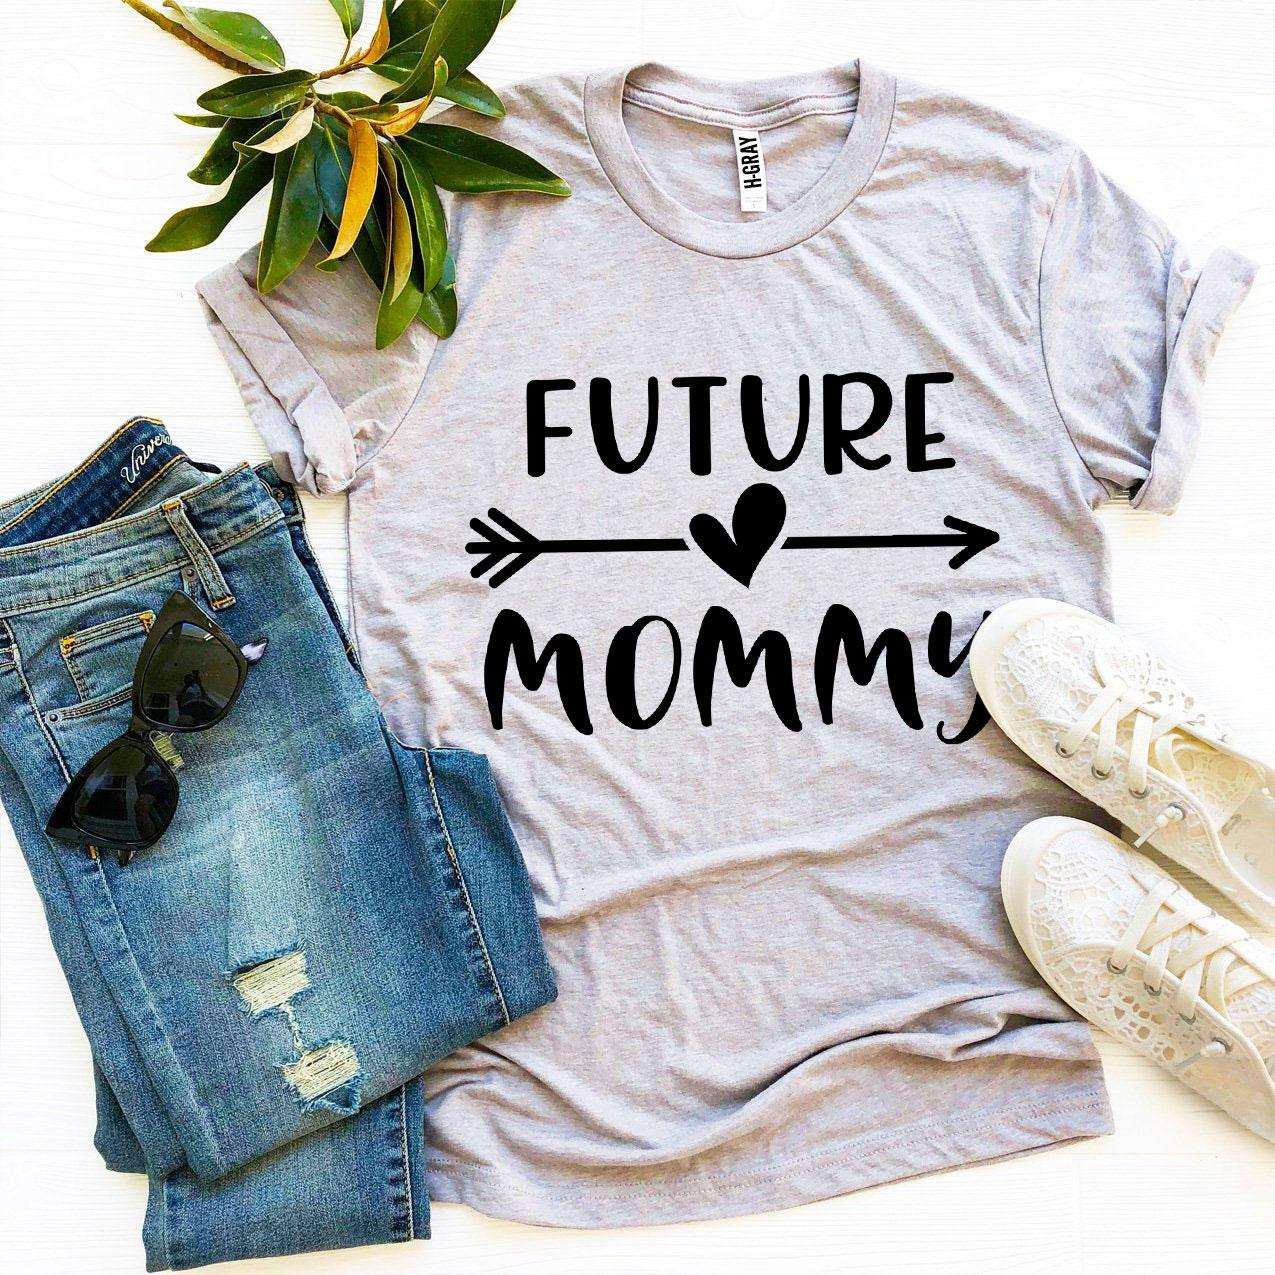 Nfin8 Maternal Glow - 'Future Mommy' Premium Soft Feel T-Shirt